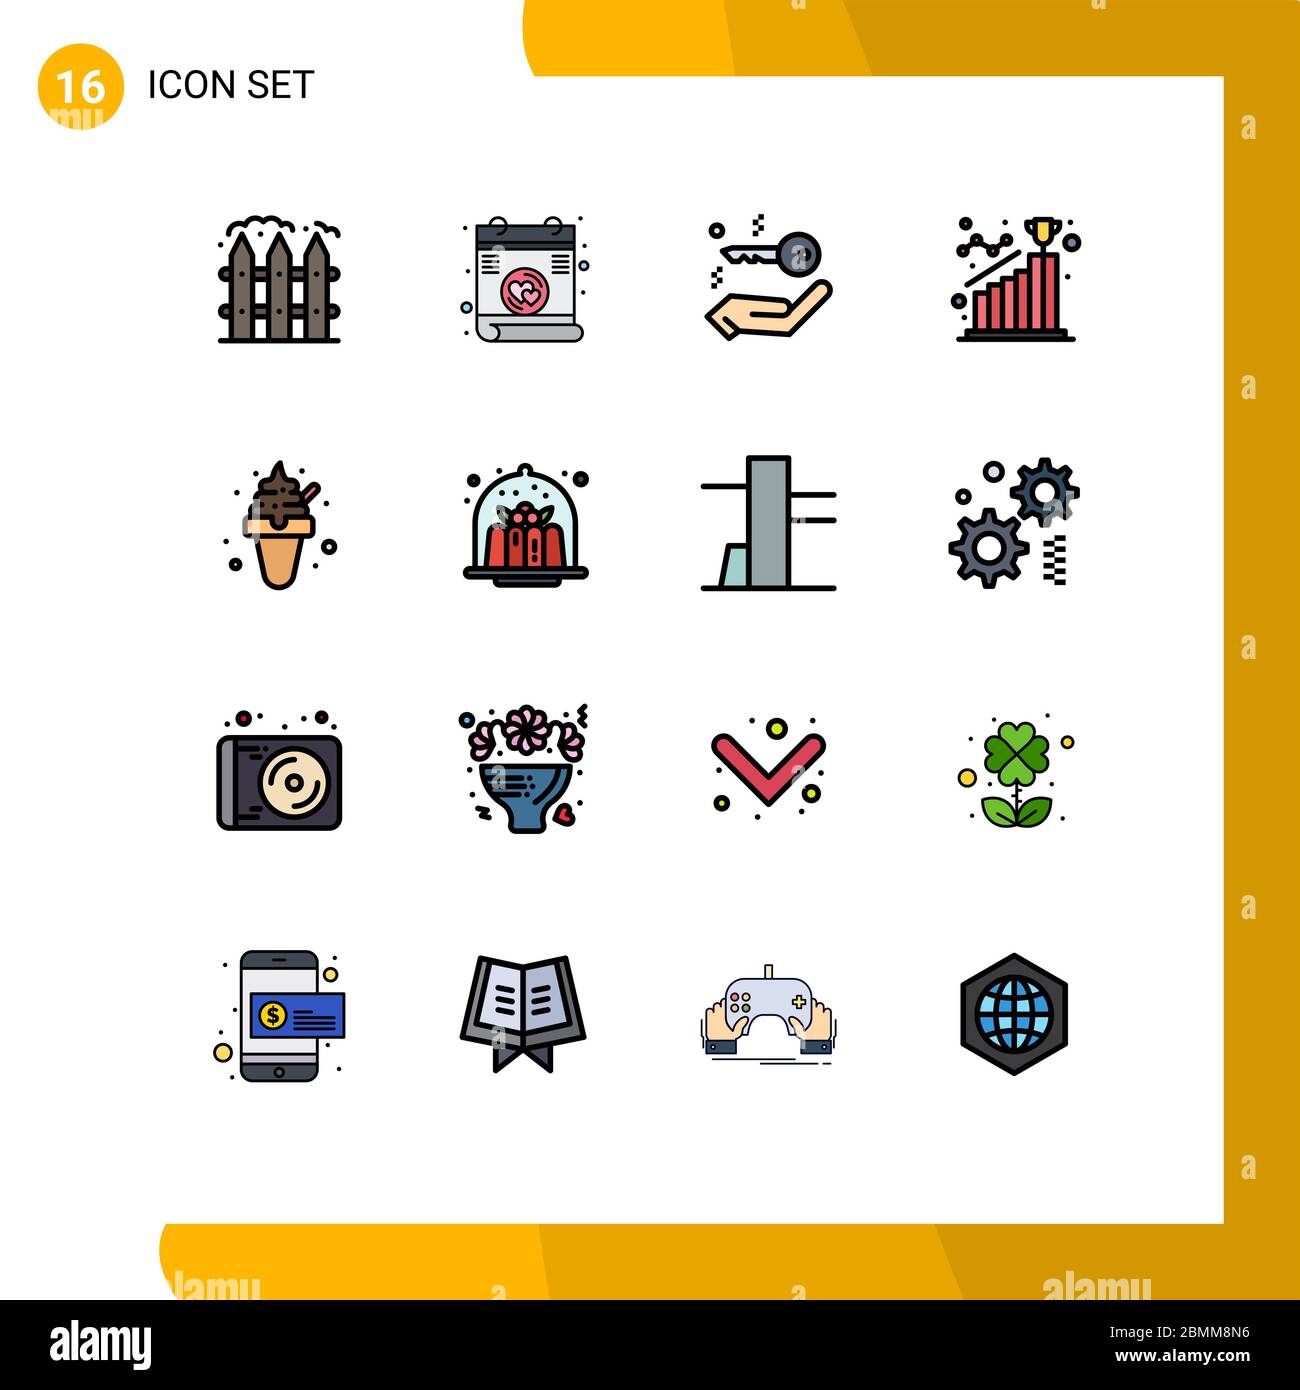 Set of 16 Modern UI Icons Symbols Signs for ice cream, dessert, key, step, goal Editable Creative Vector Design Elements Stock Vector